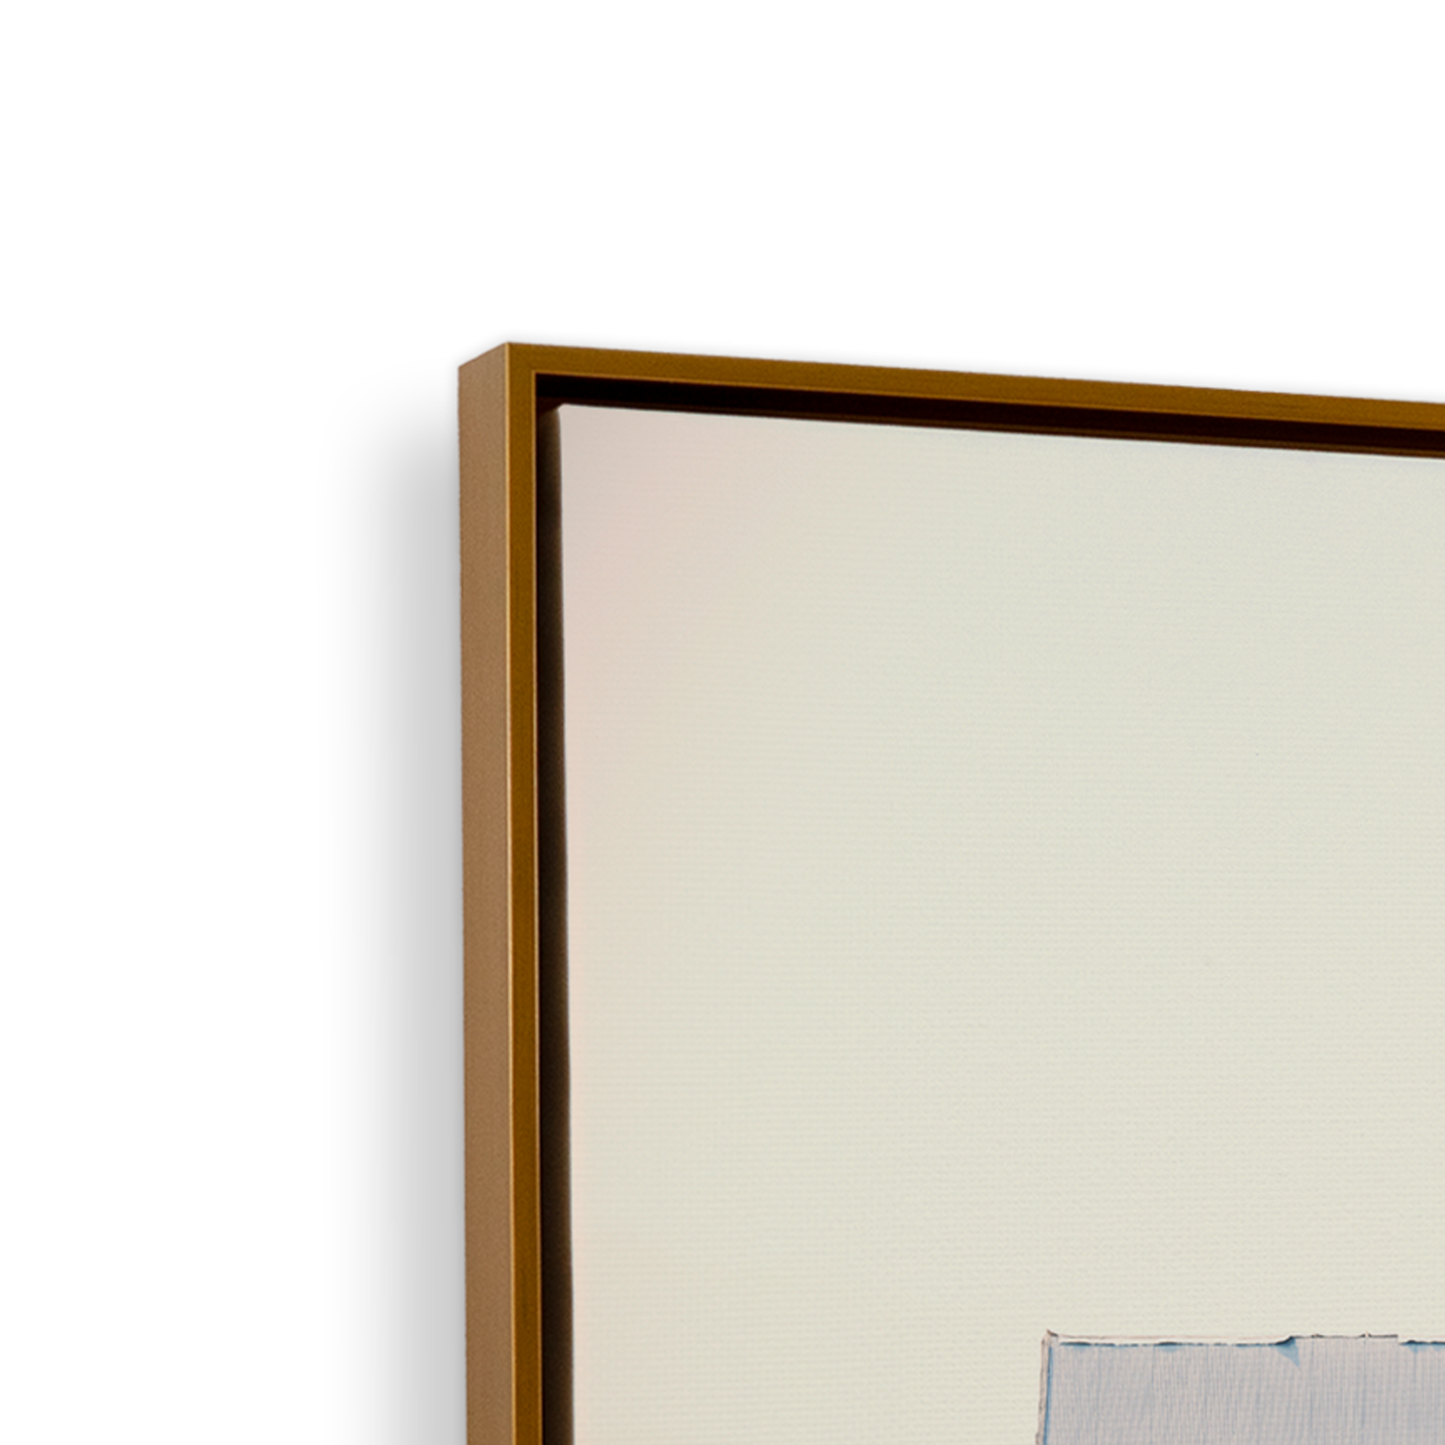 [color:Polished Gold], Picture of corner of frame